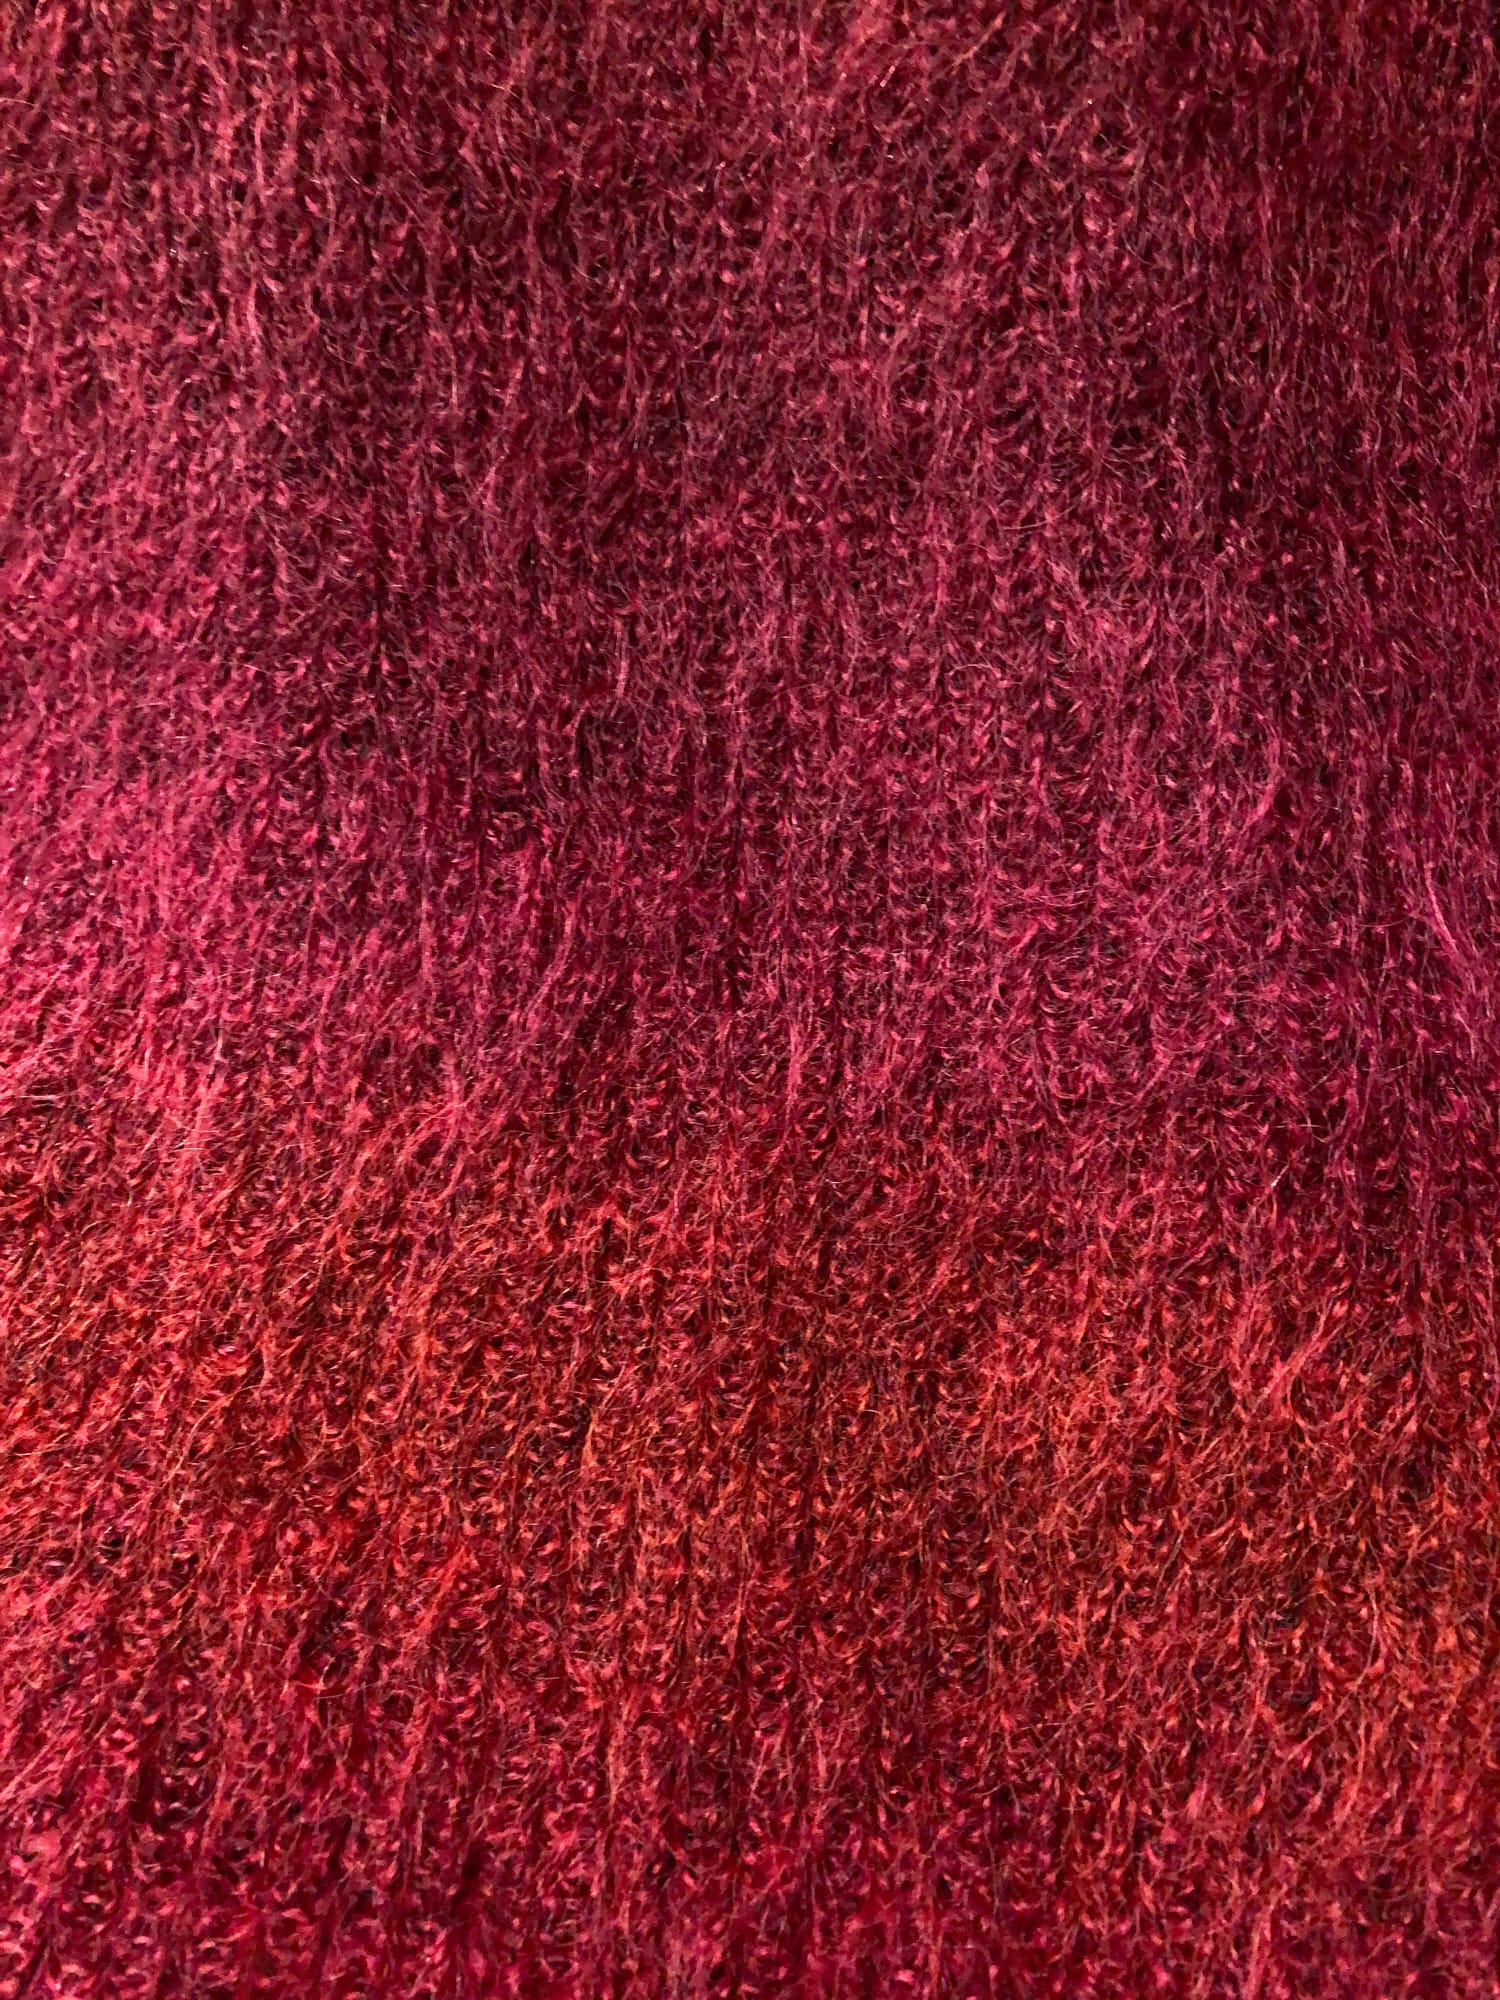 Patrick Cox Wannabe purple red mohair-y wool turtleneck jumper